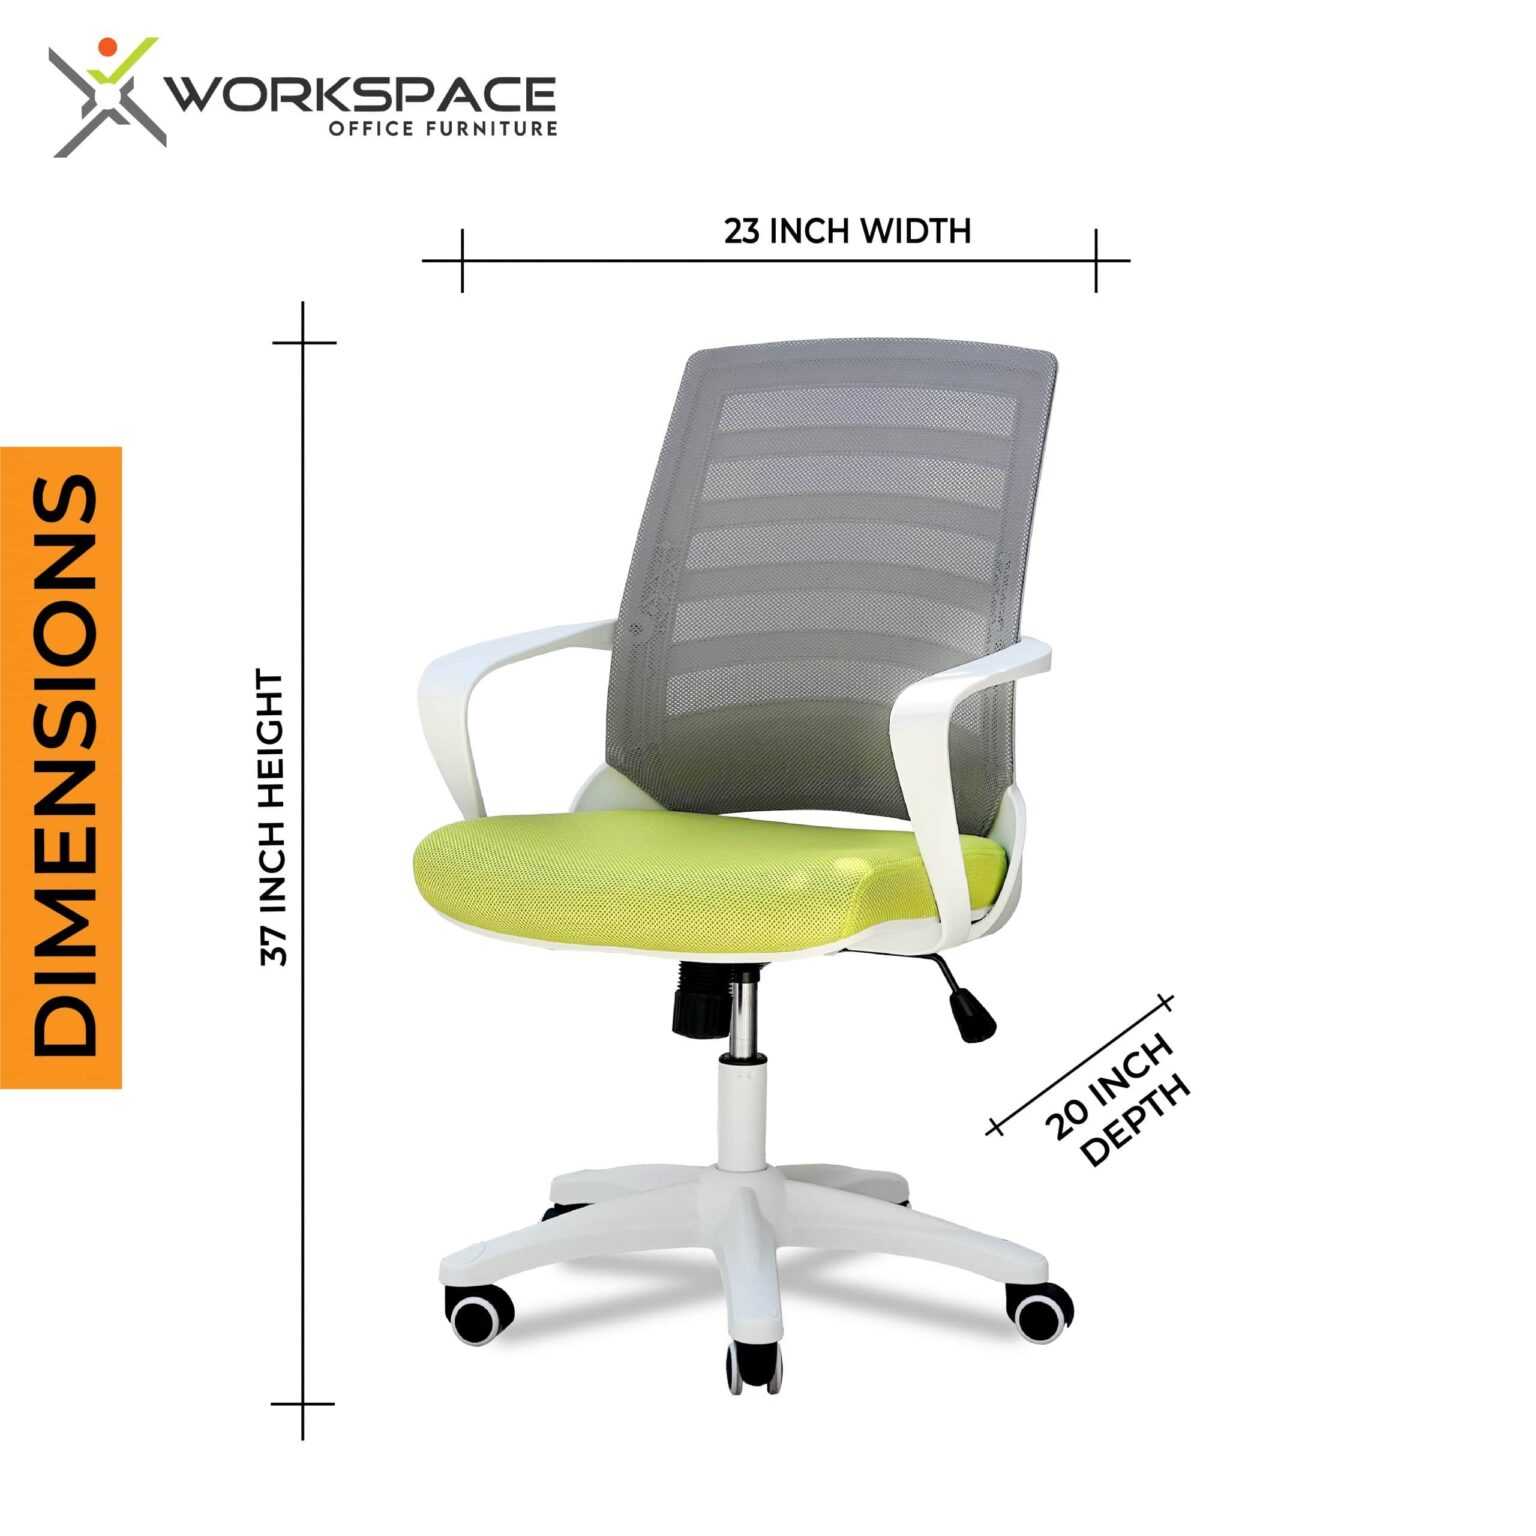 Glassgow Staff Chair (Green) -Dimensions